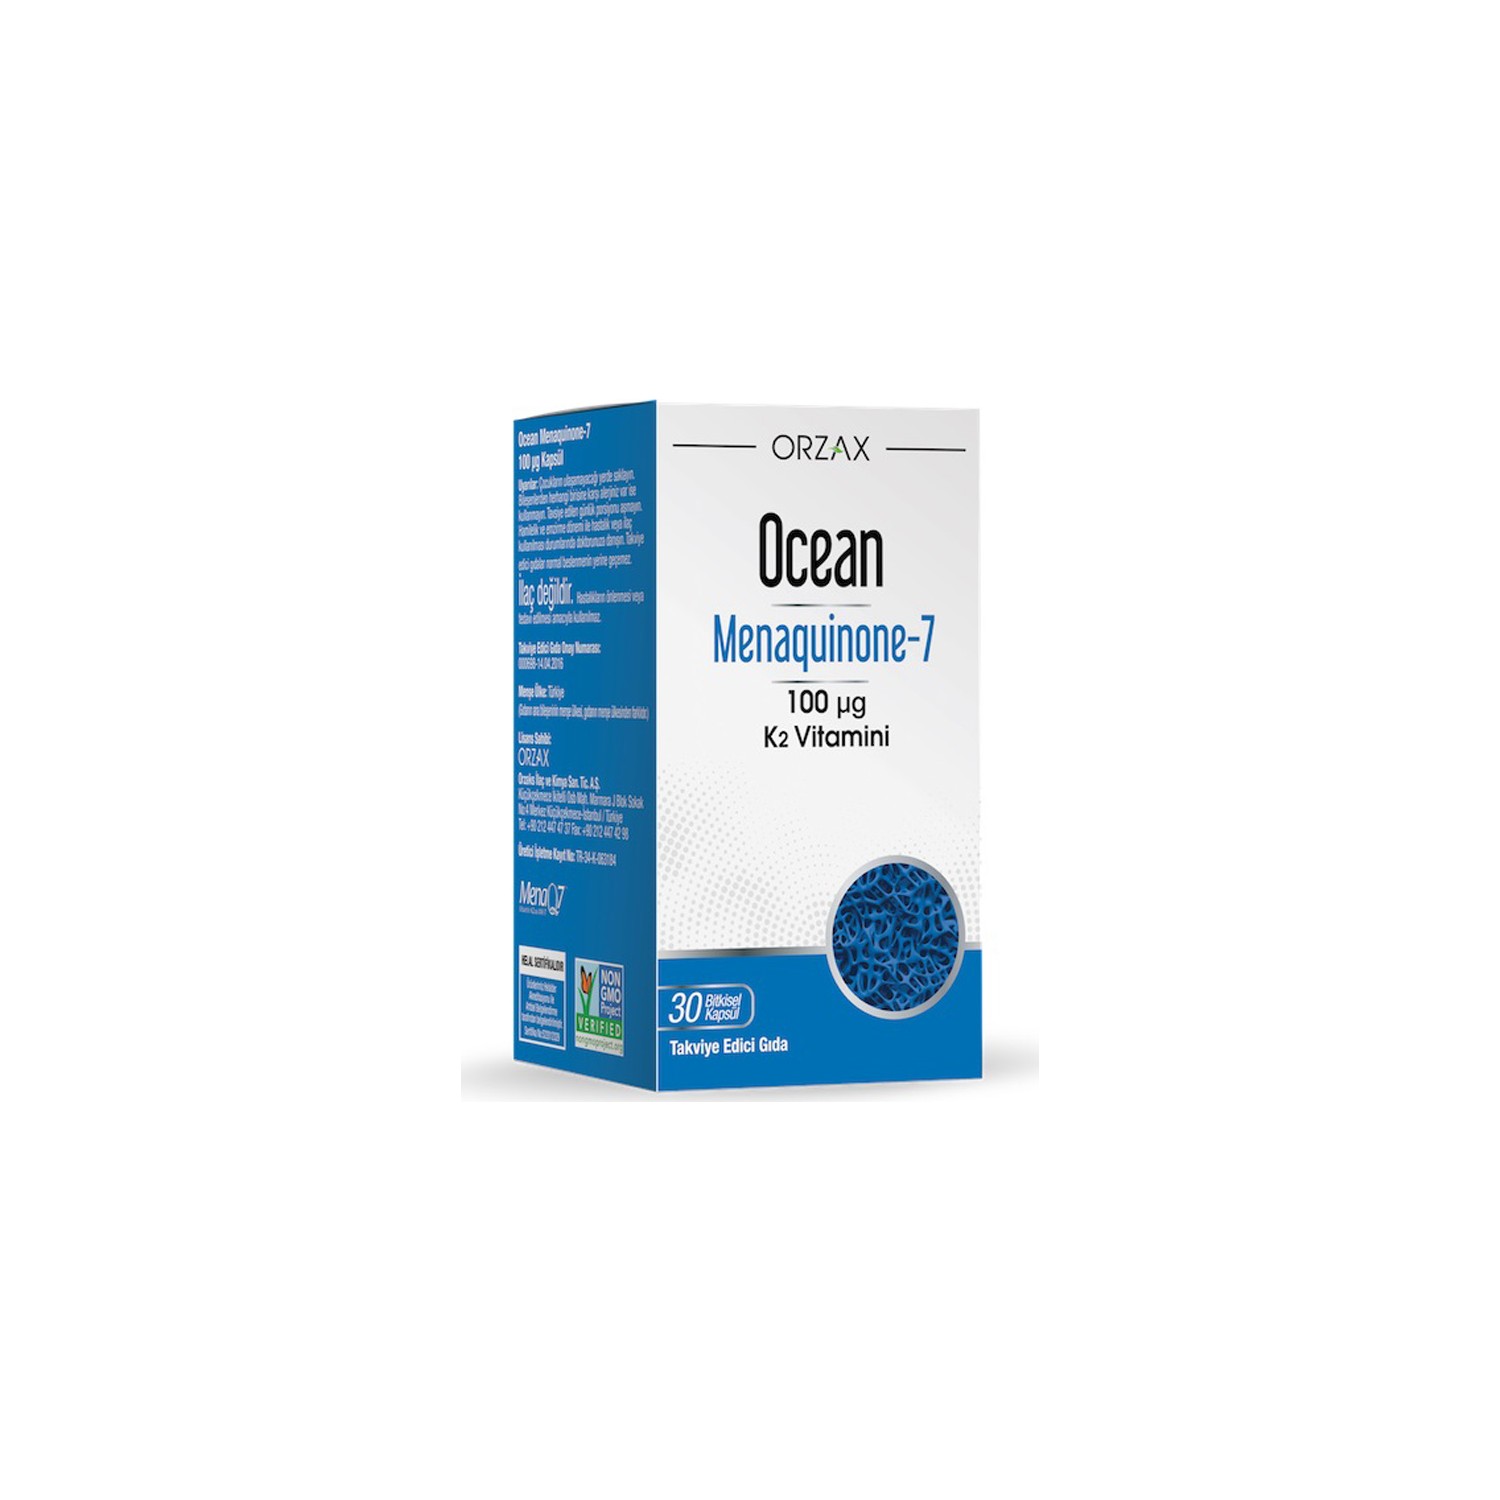 Пищевая добавка Orzax Ocean Mk-7 Vitamin К2 100 мкг, 30 капсул